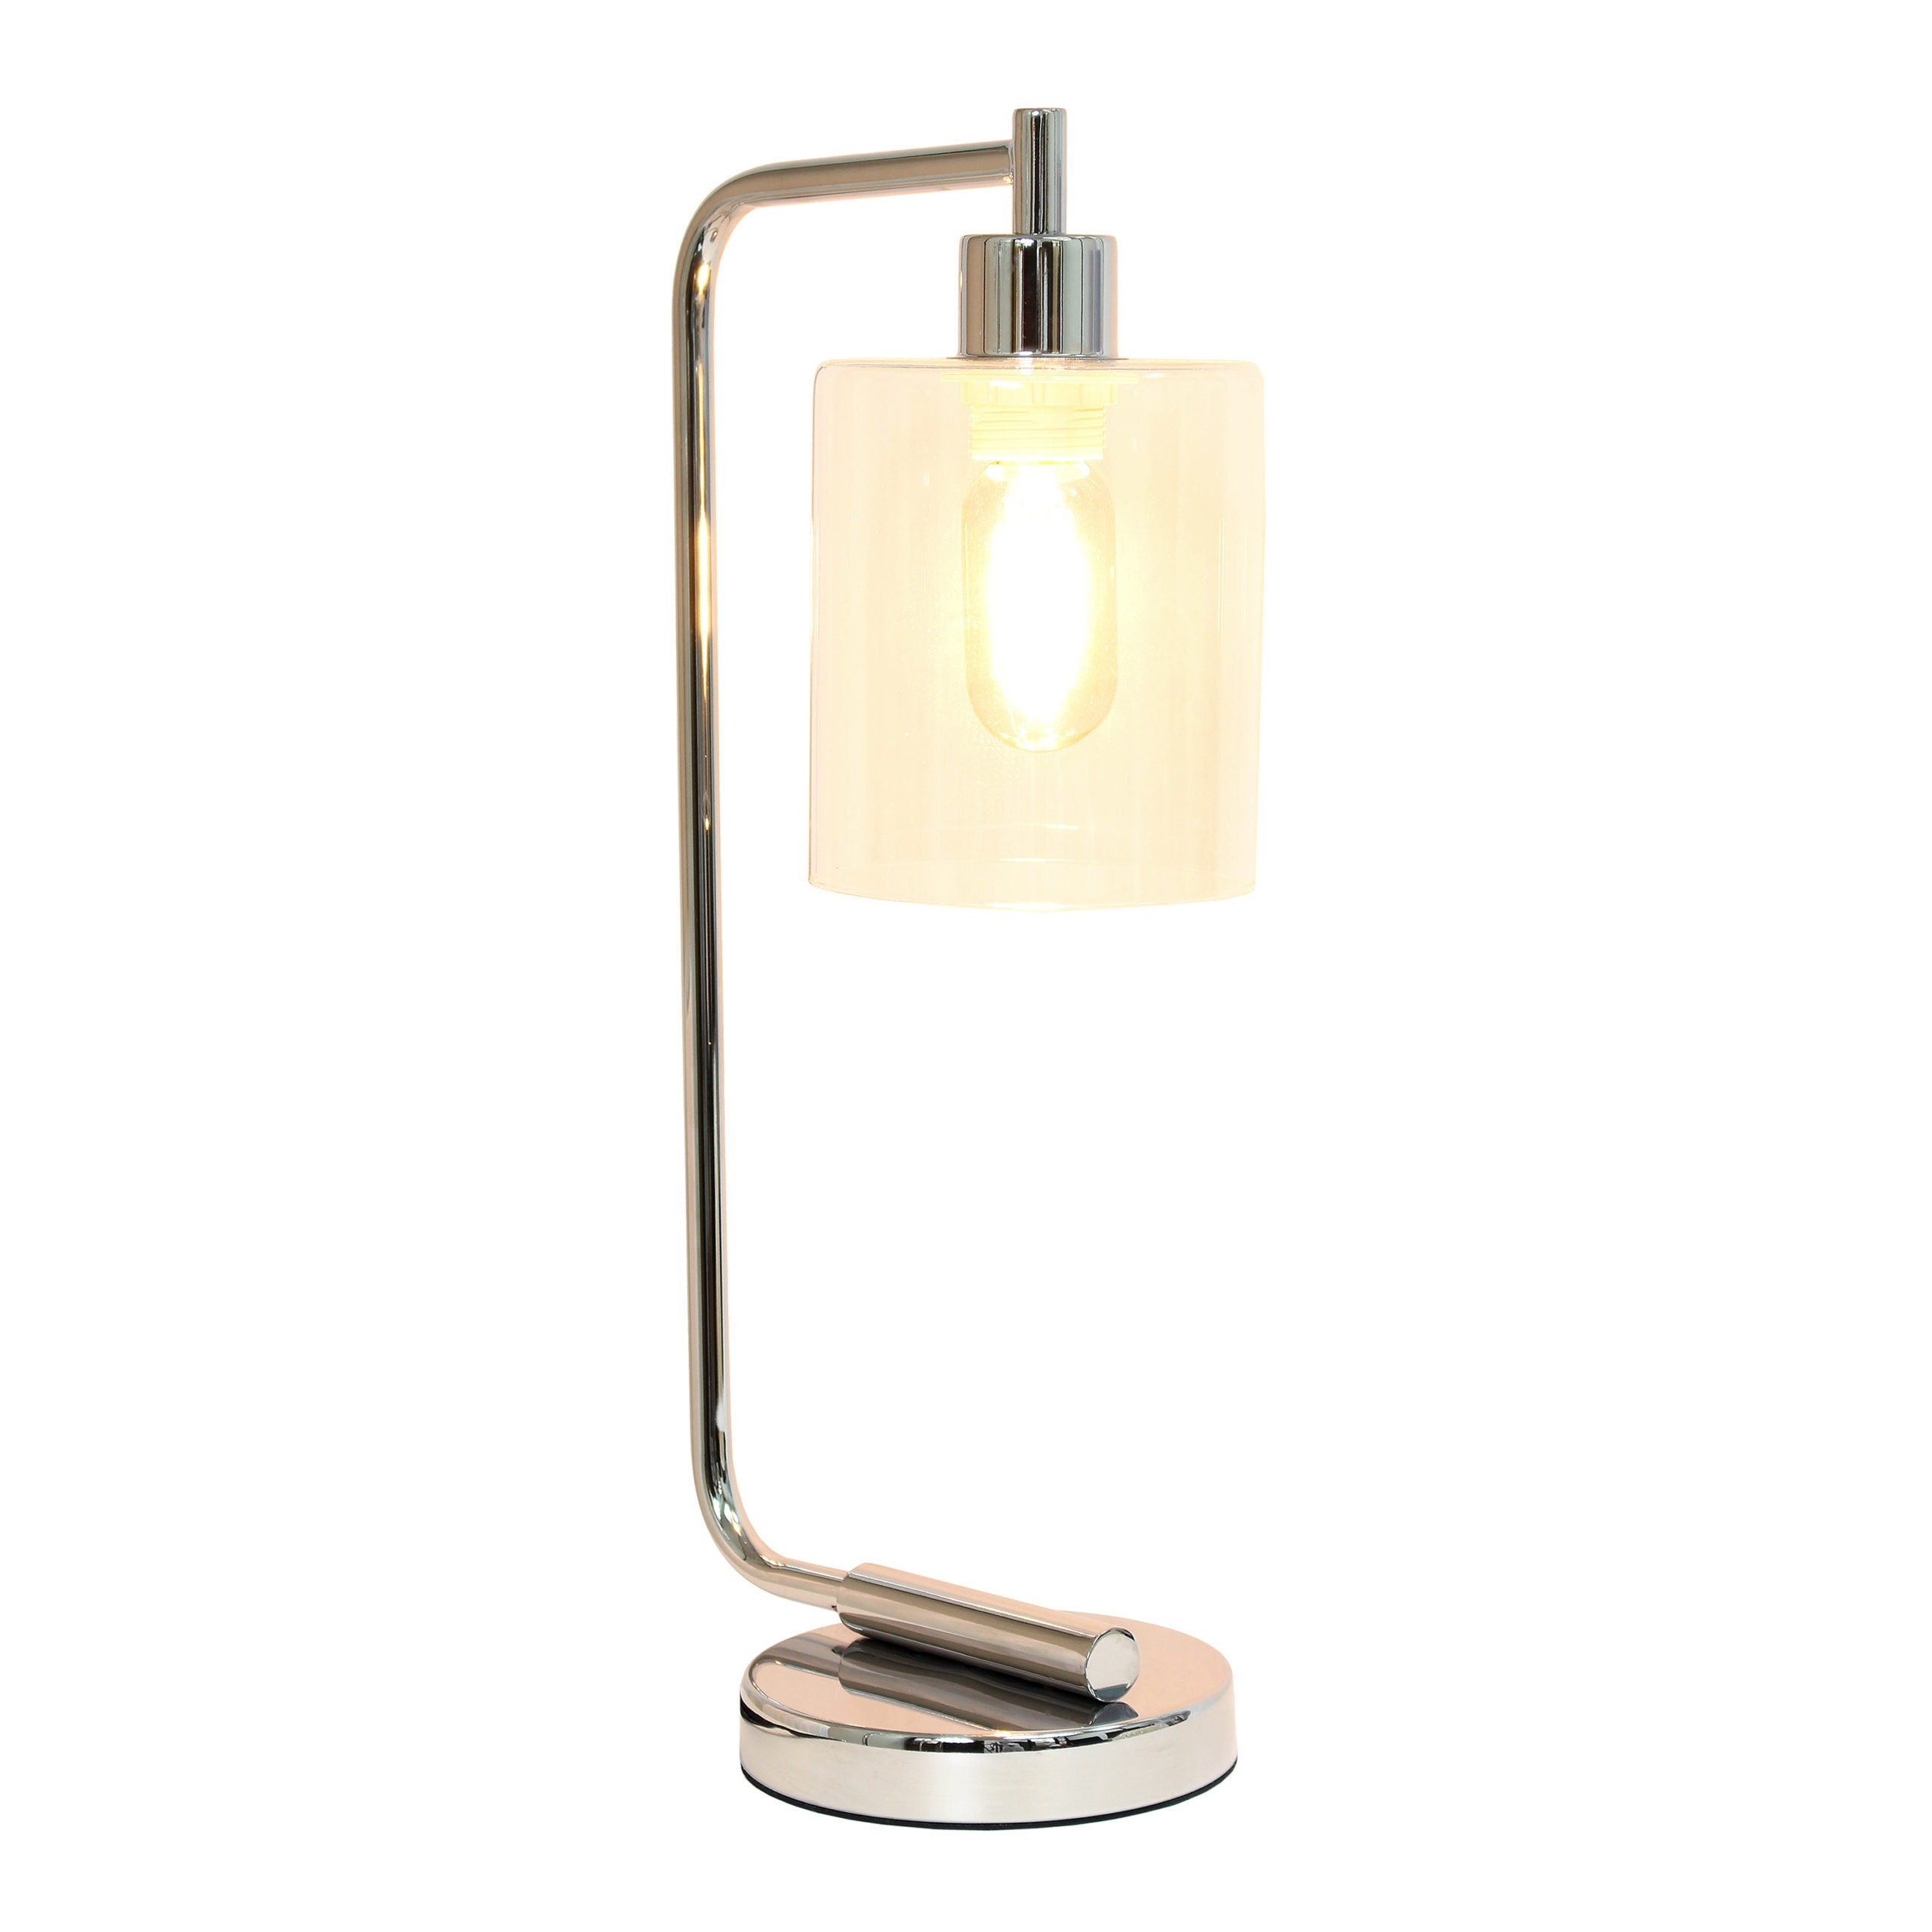 Industrial Iron Lantern Desk Lamp, Hudson Industrial Floor Lamp Threshold Glass Shade Replacement